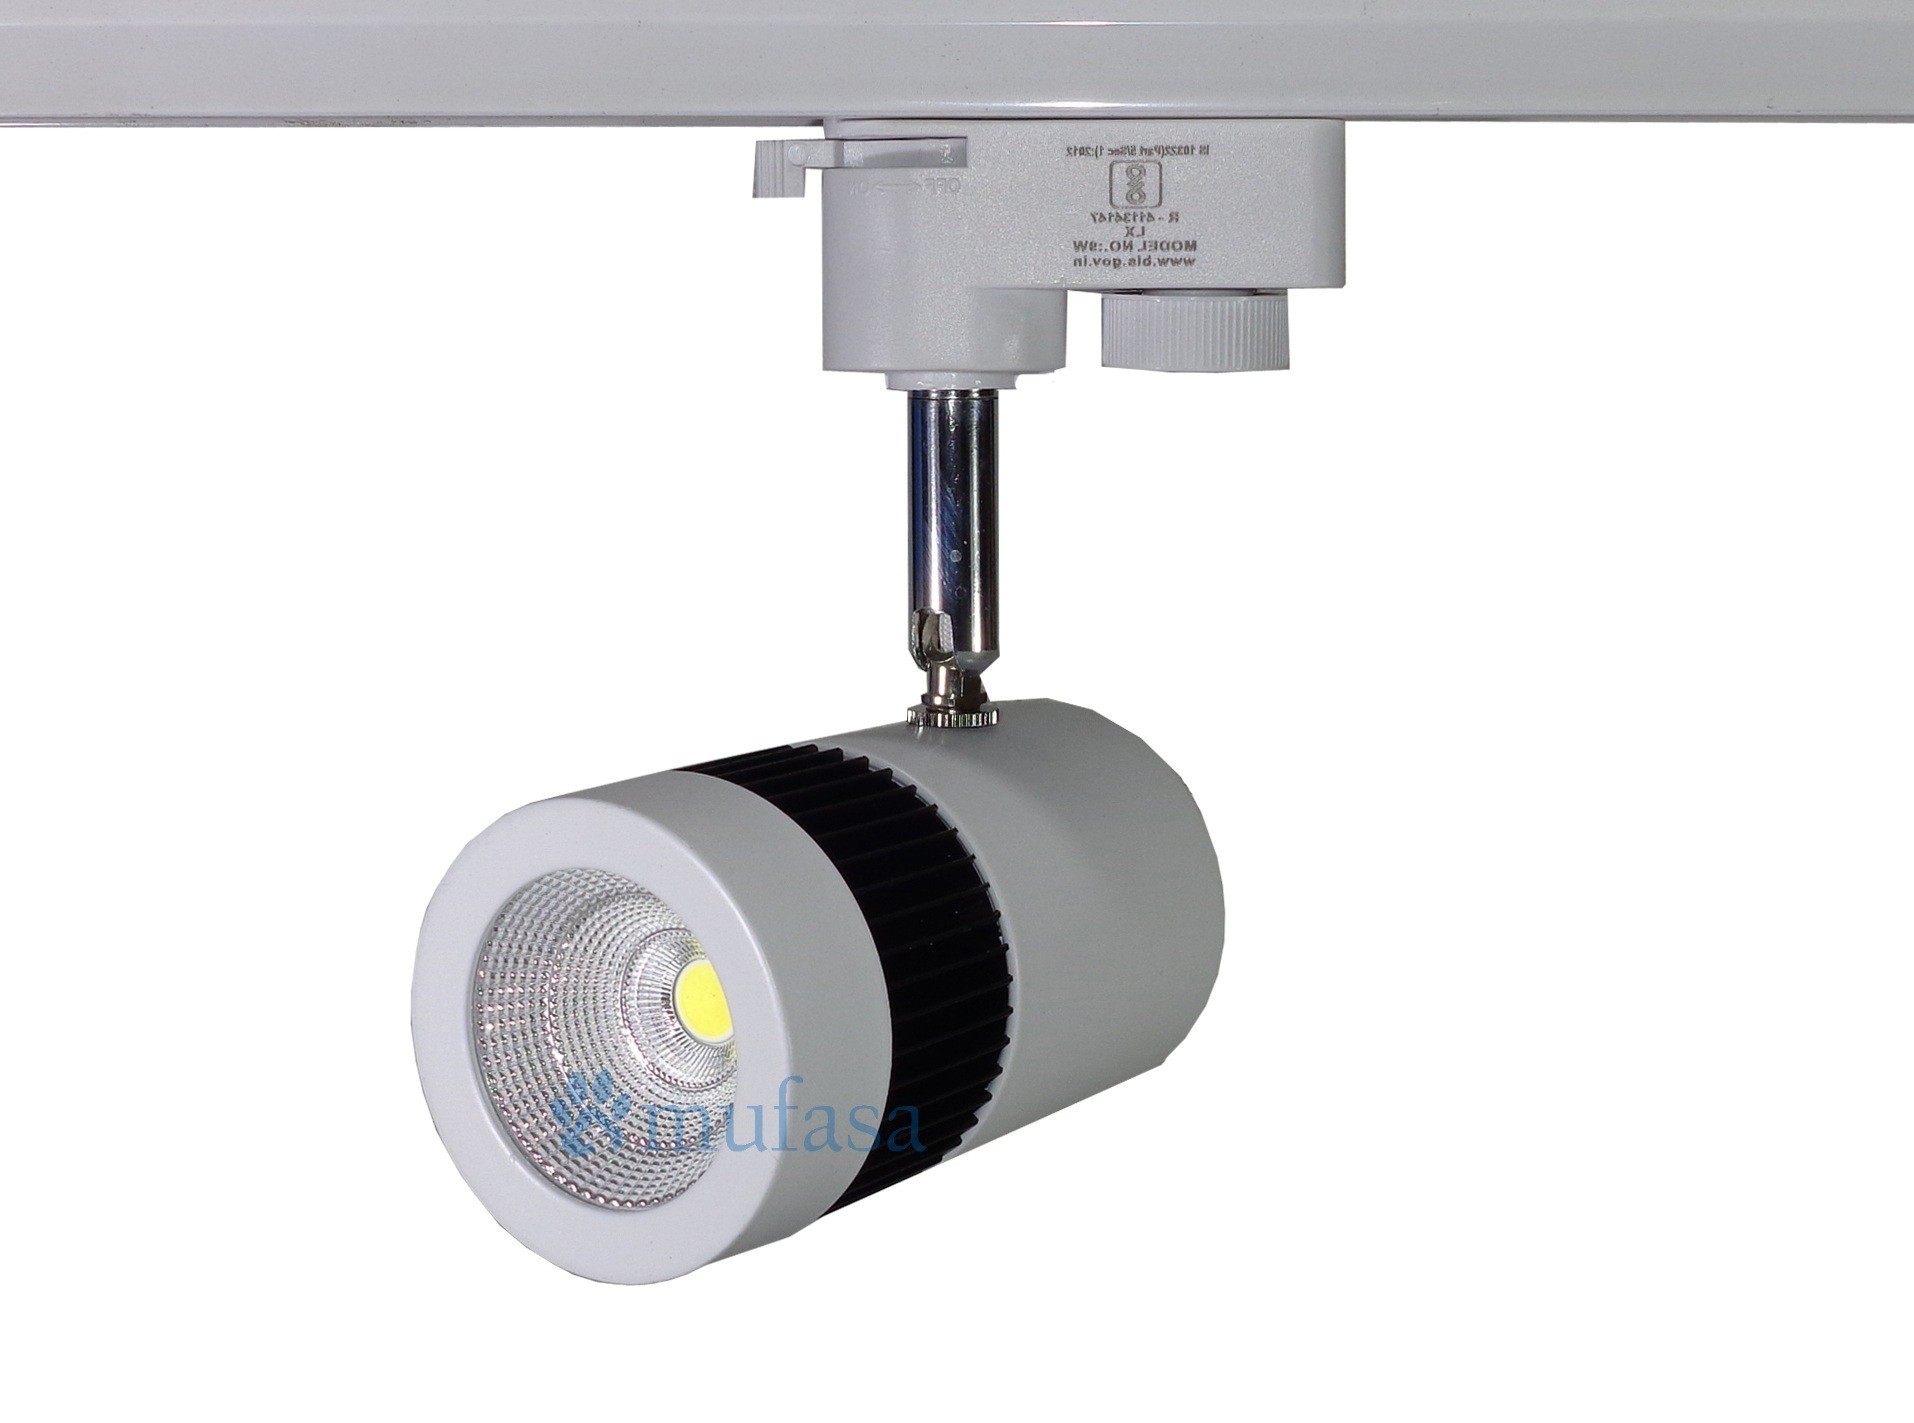 Mufasa 9 Watts LED Track Light Spot Light/Focus Light (Track Rail